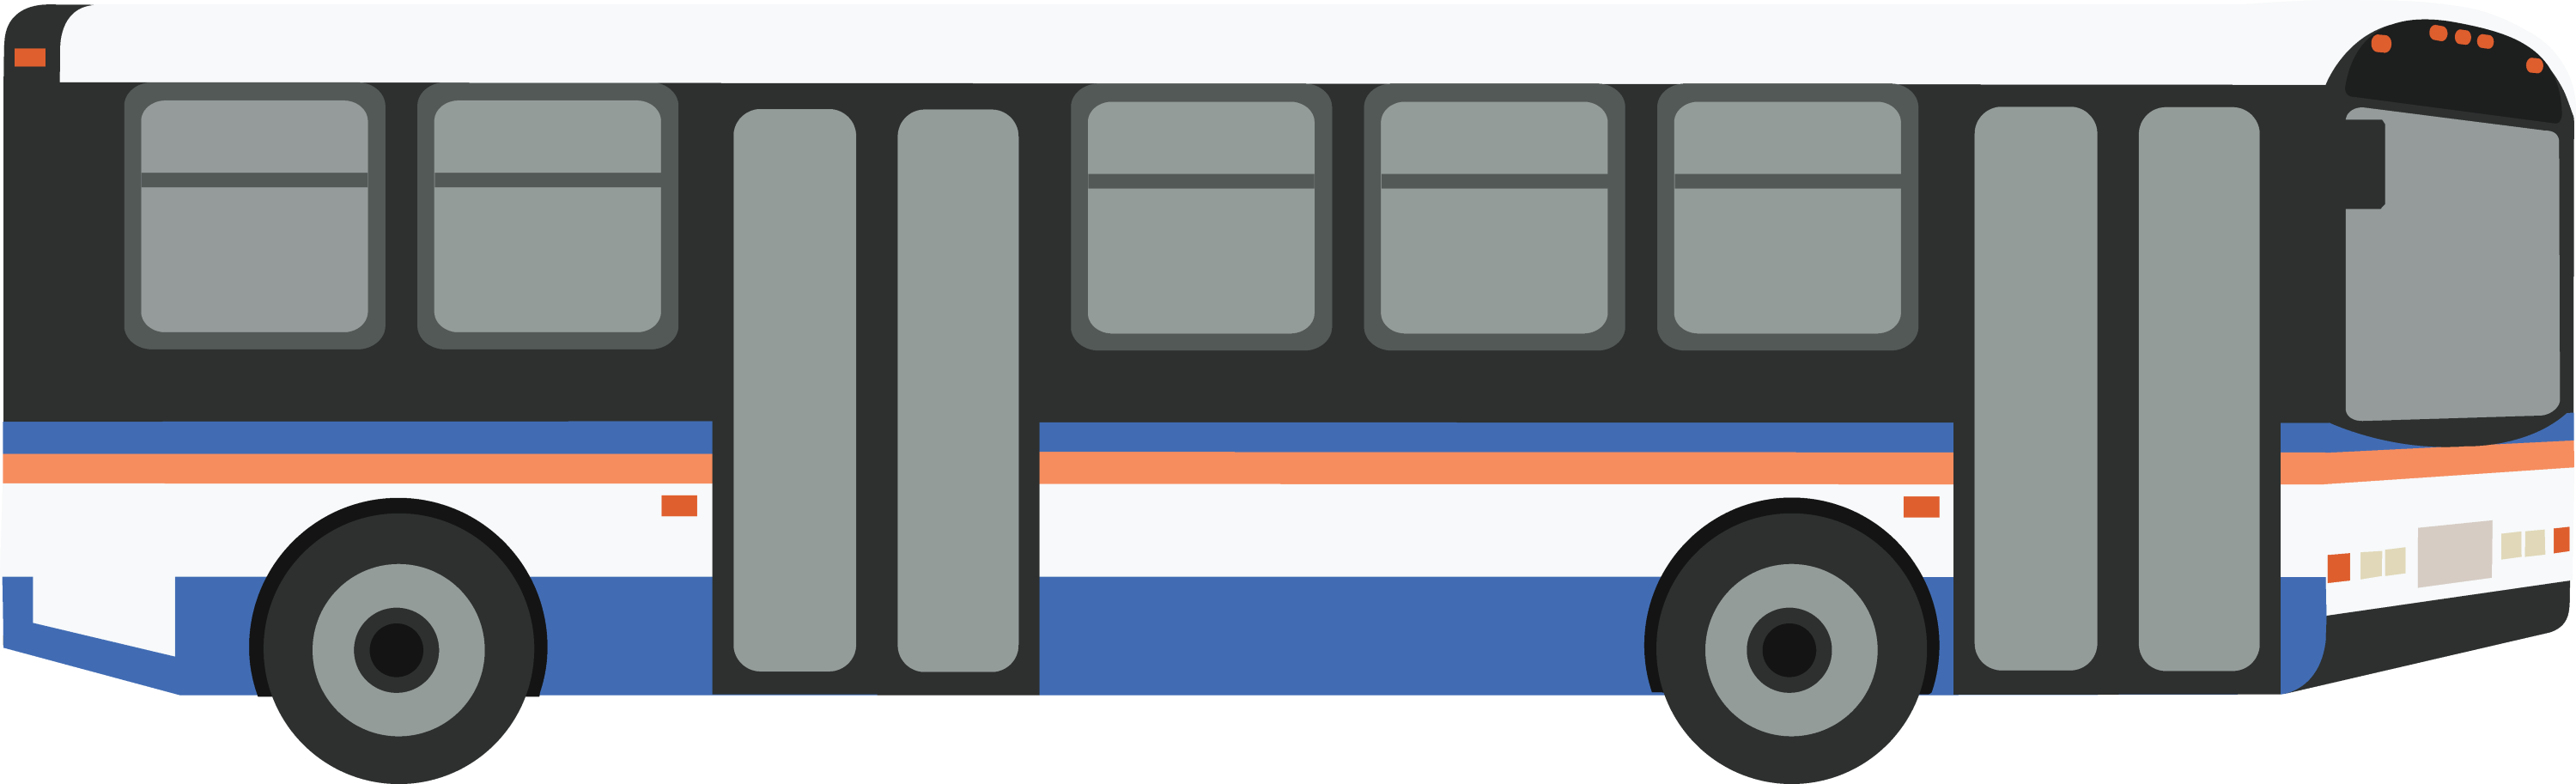 clip art of shuttle bus - photo #24